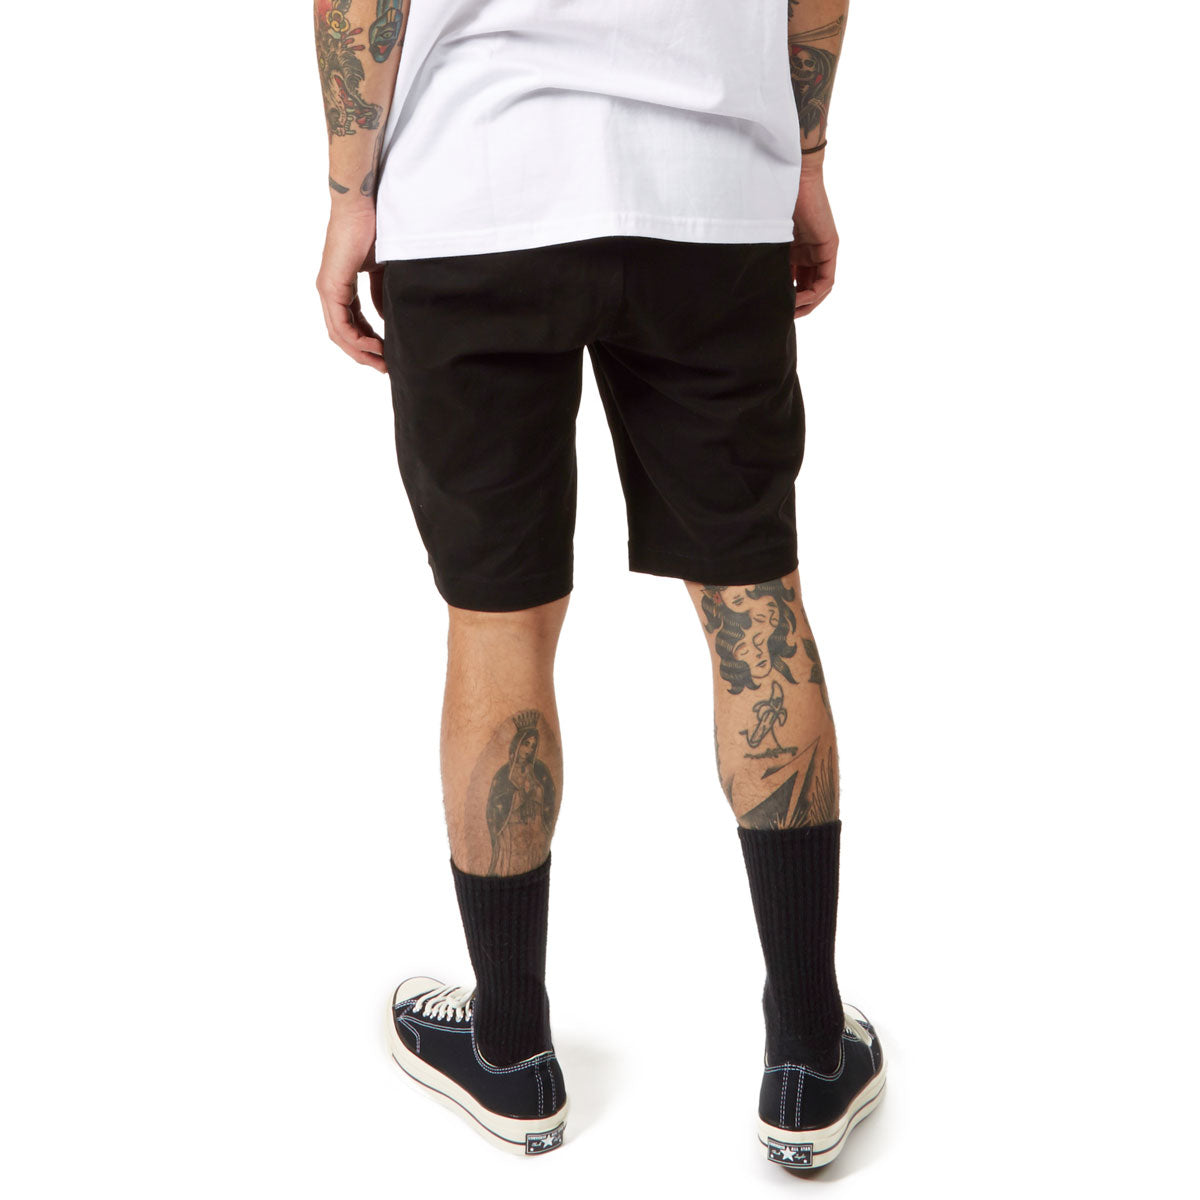 CCS Standard Plus Chino Shorts - Black image 4